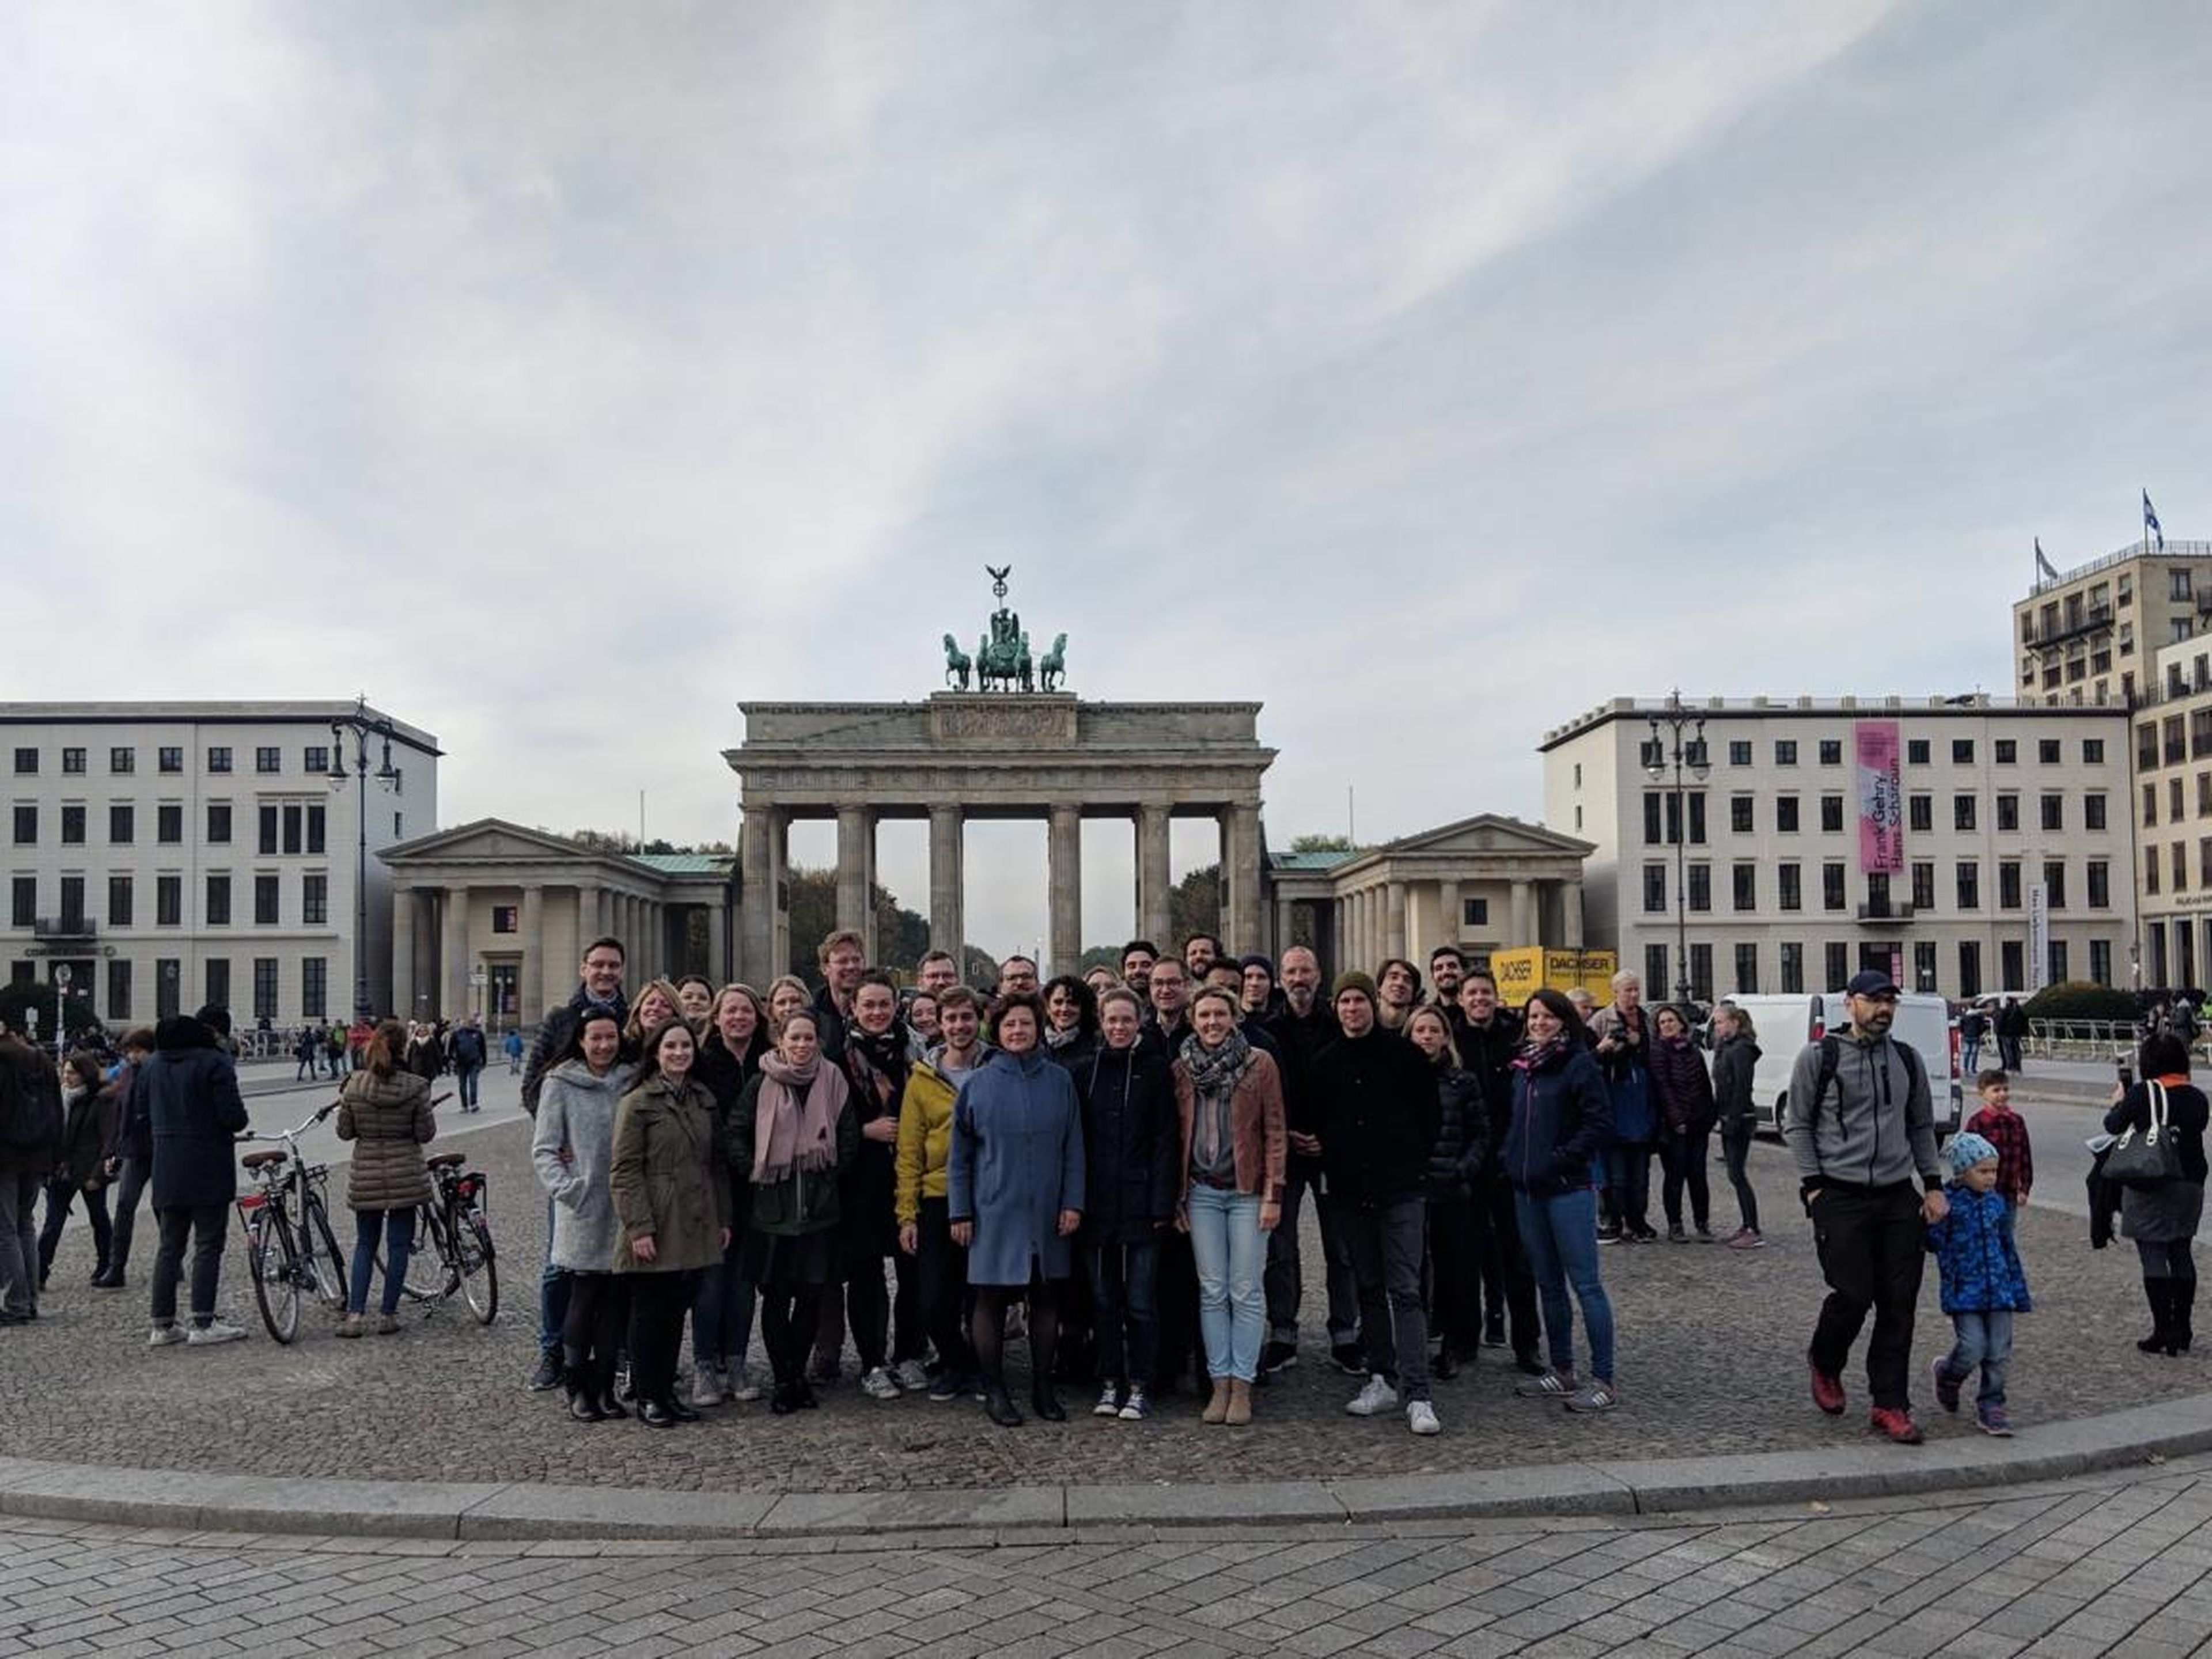 Berlin Googlers stood in front of the iconic Brandenburg gate.